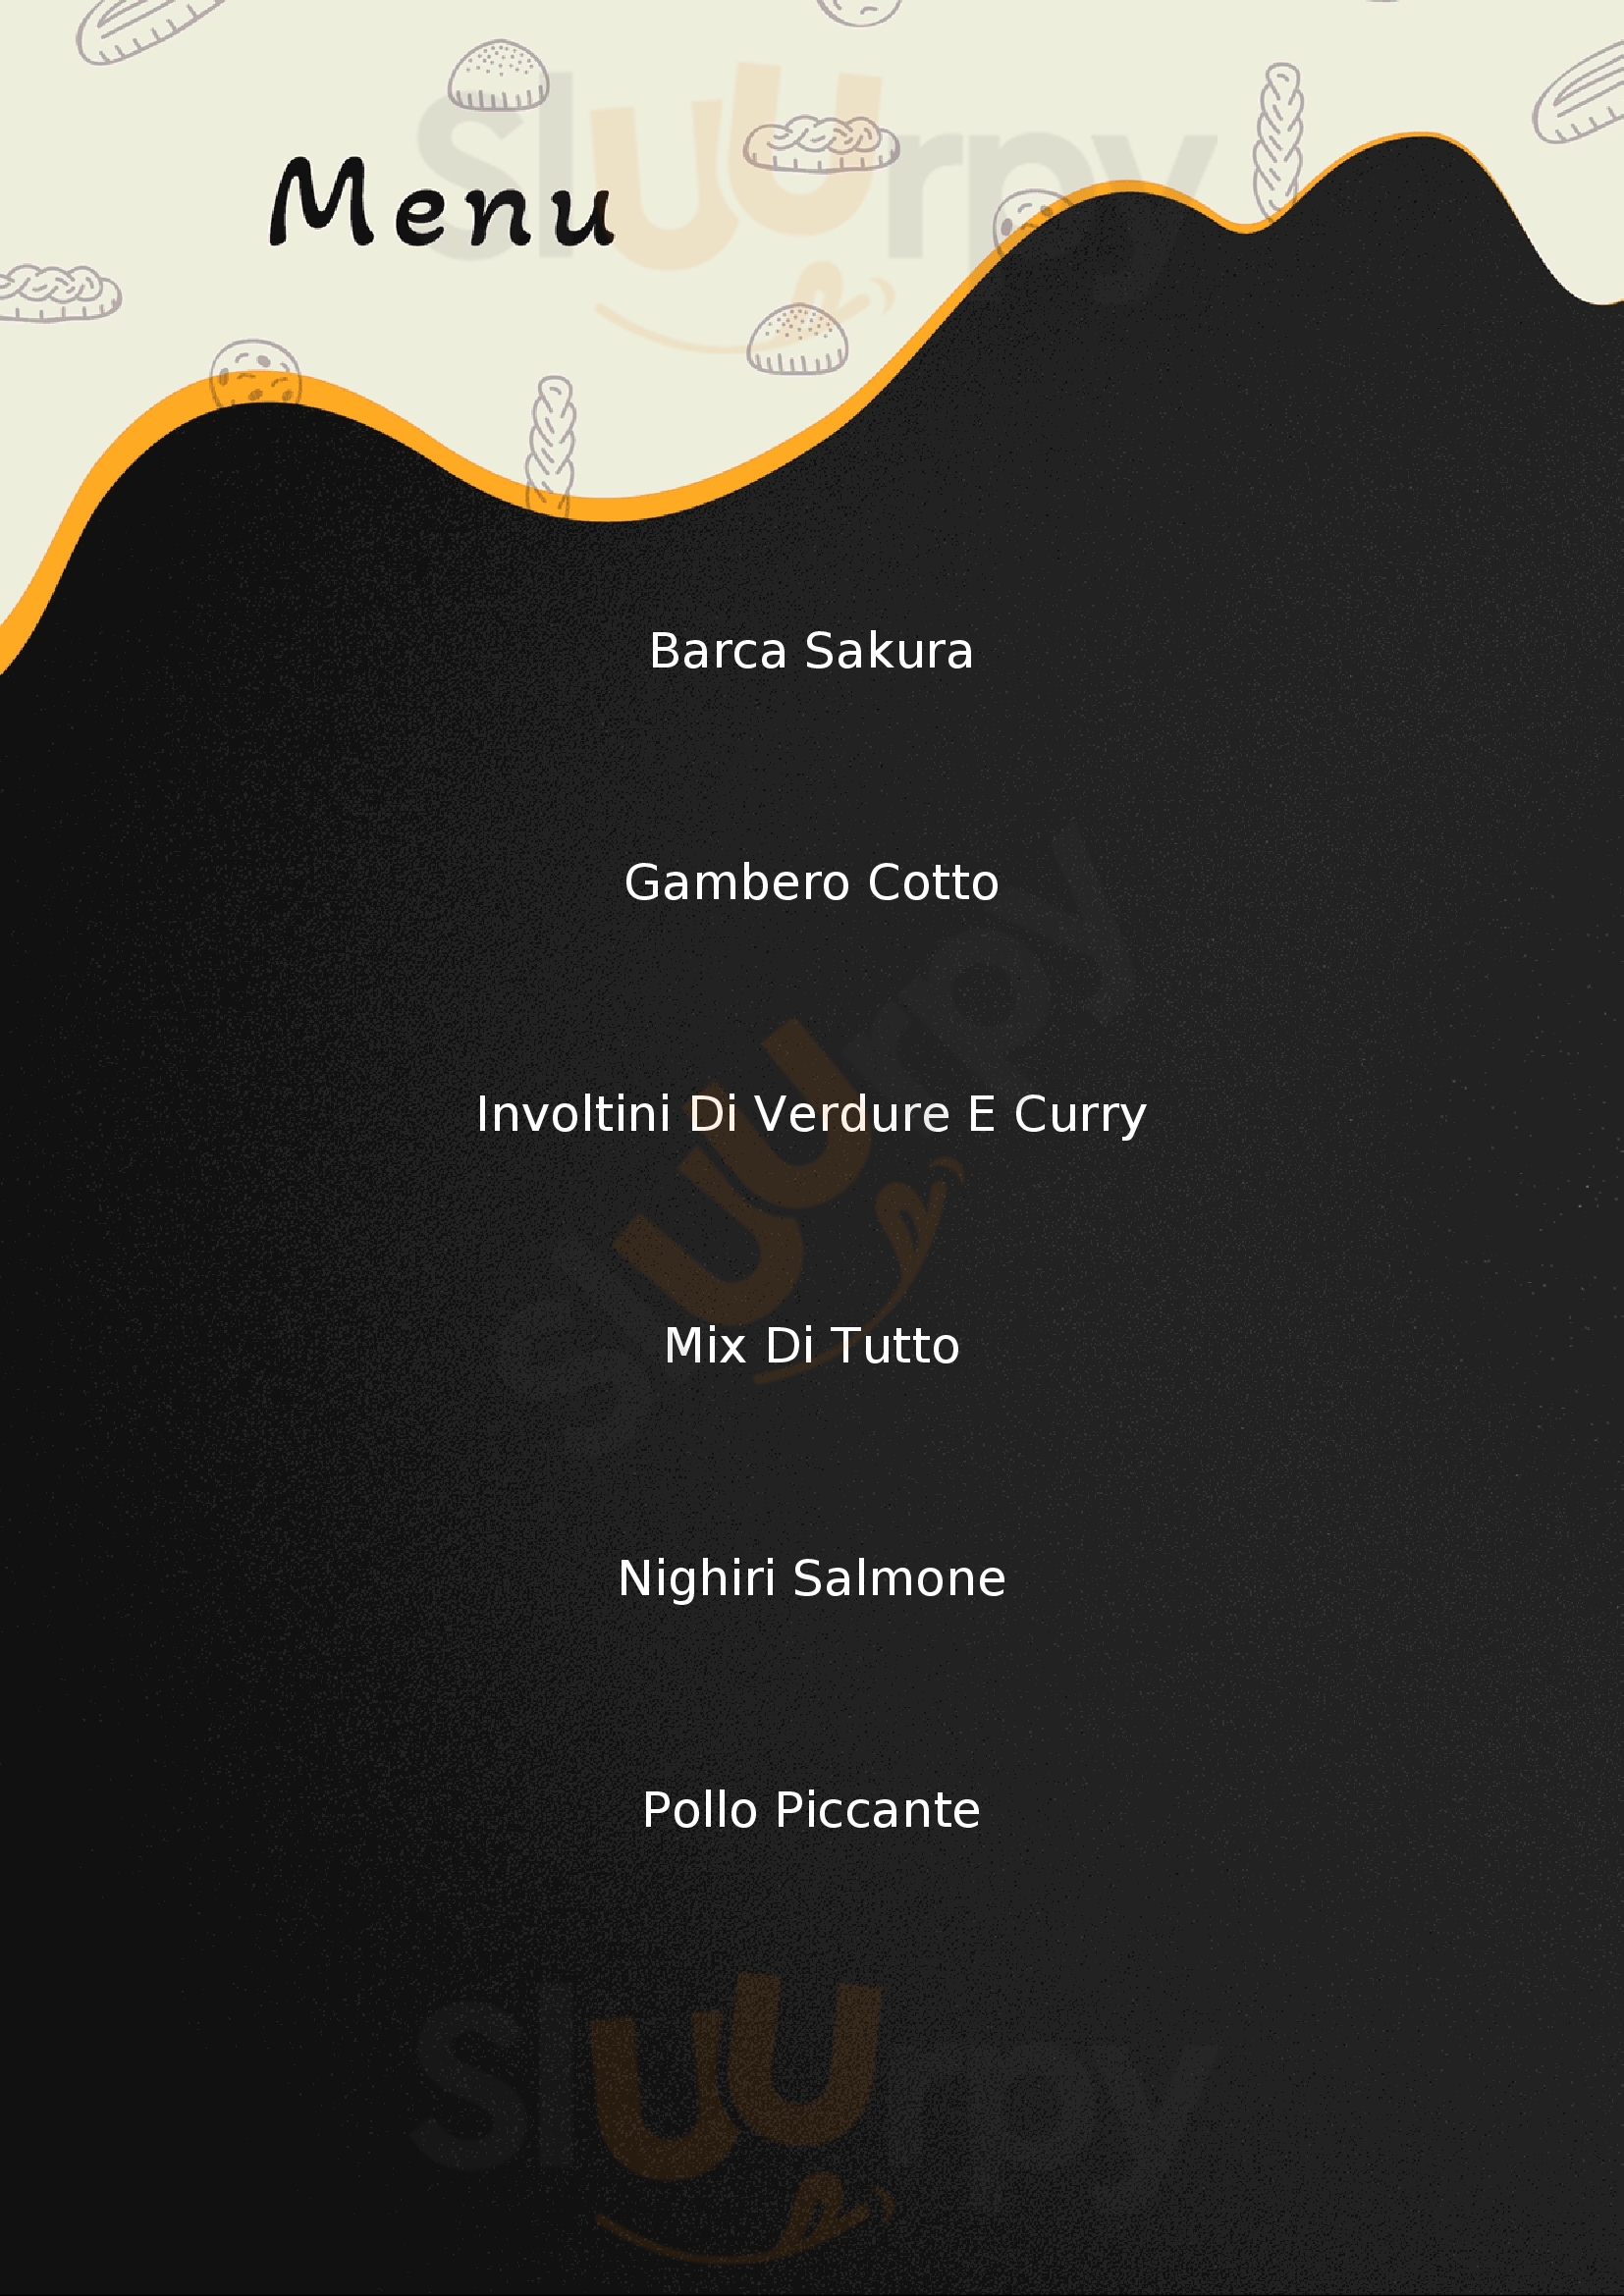 Best Sushi Ristorante Savona menù 1 pagina